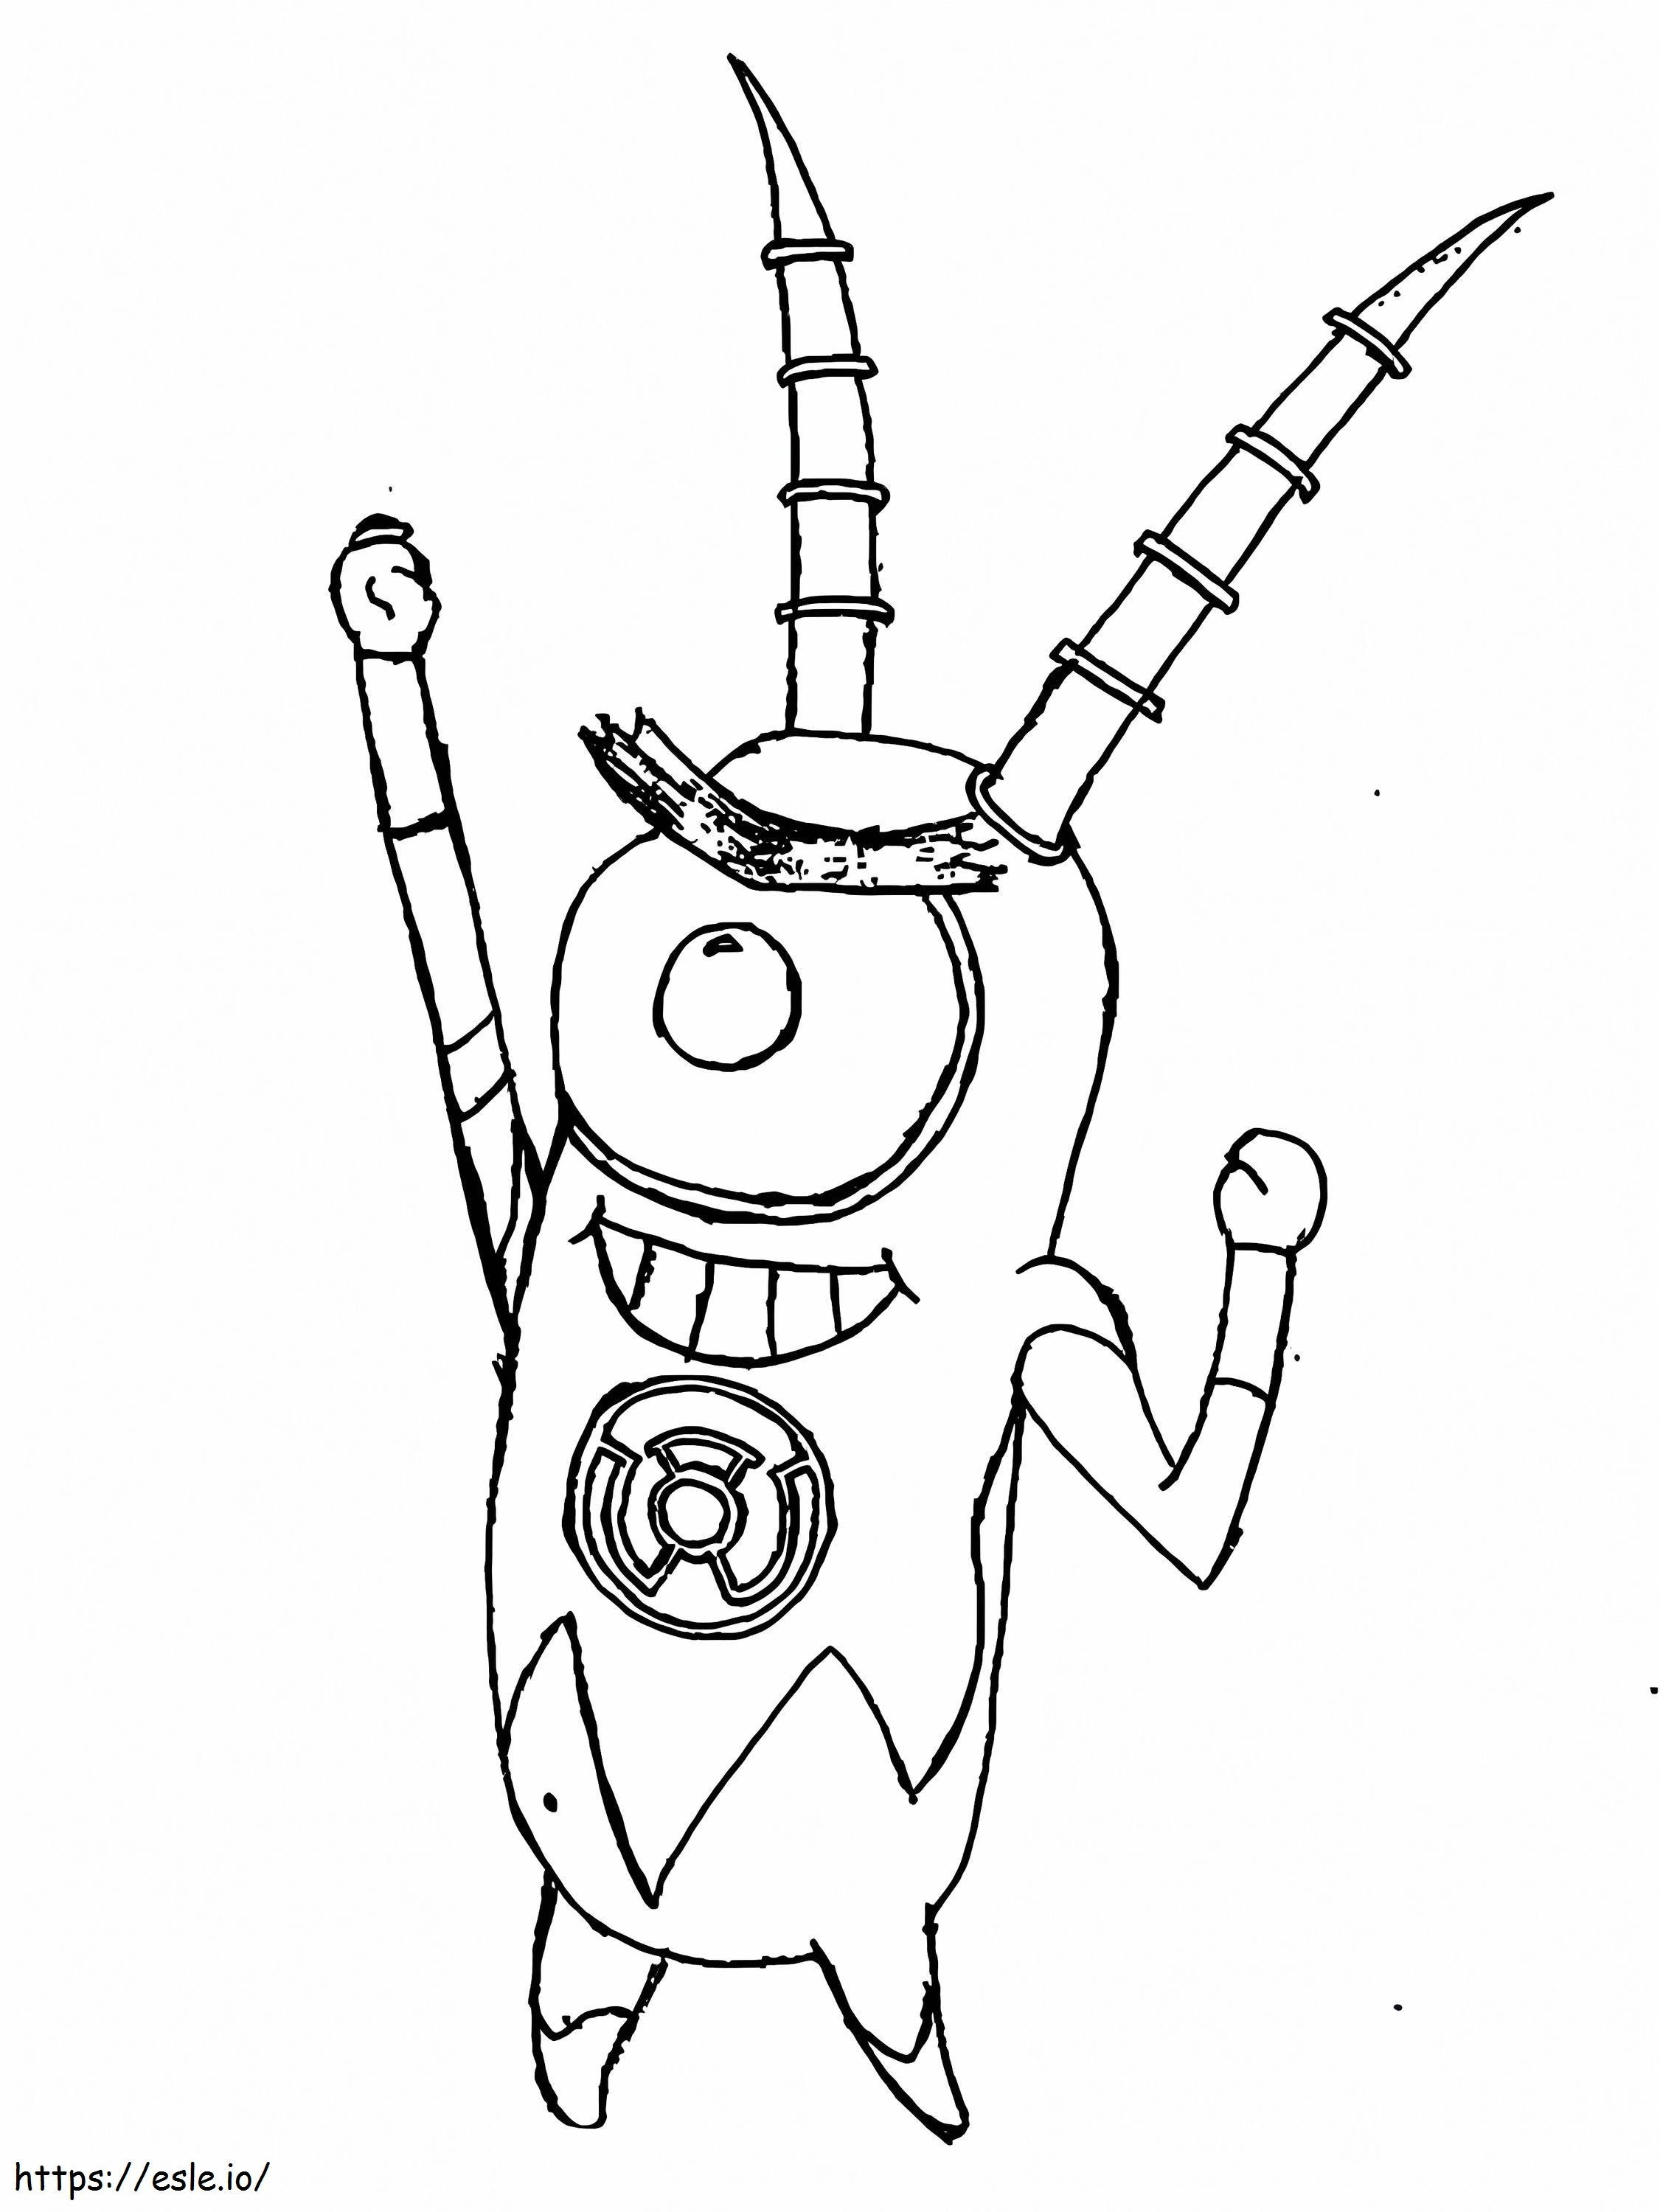 Plankton Hero coloring page